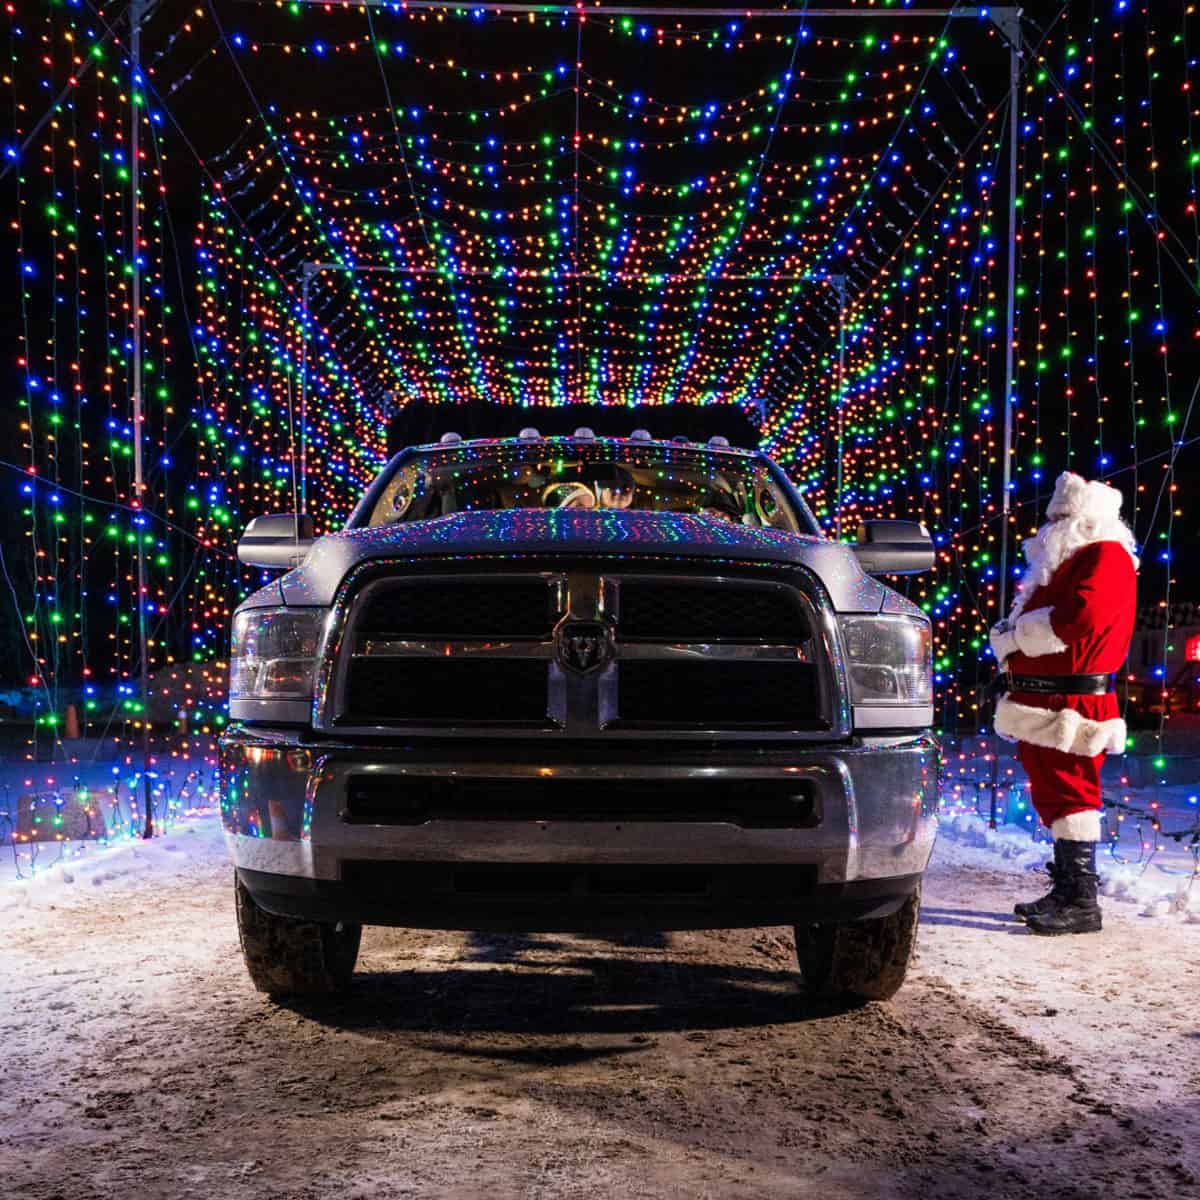 Santa makes an appearance at Magic of Lights Edmonton